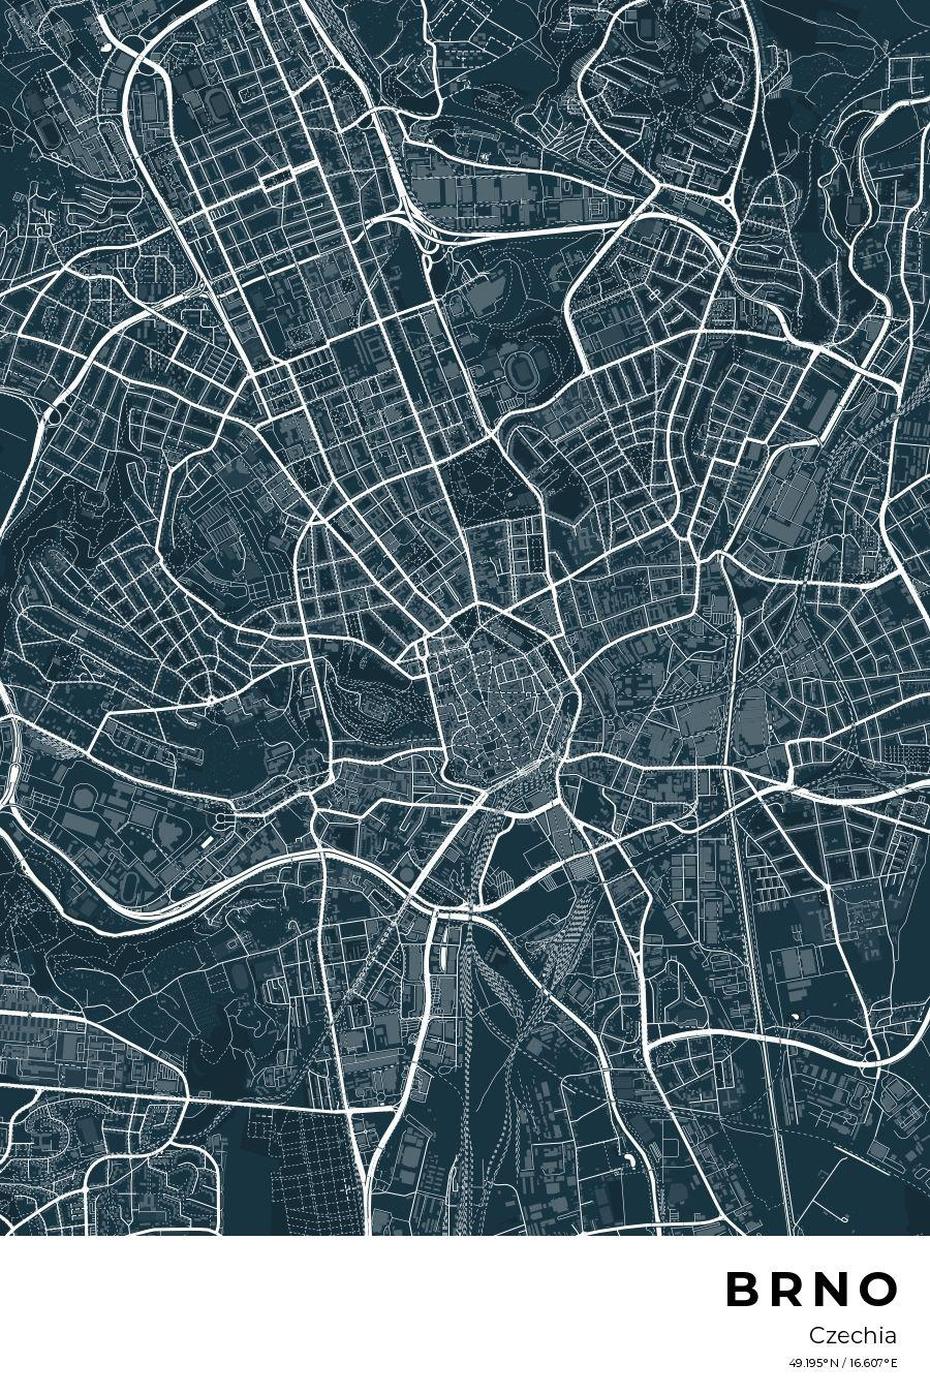 Custom City Map Poster Of Brno, Czechia In Black And White. | Map …, Brno, Czechia, Brno South Moravian Region, Cz Brno